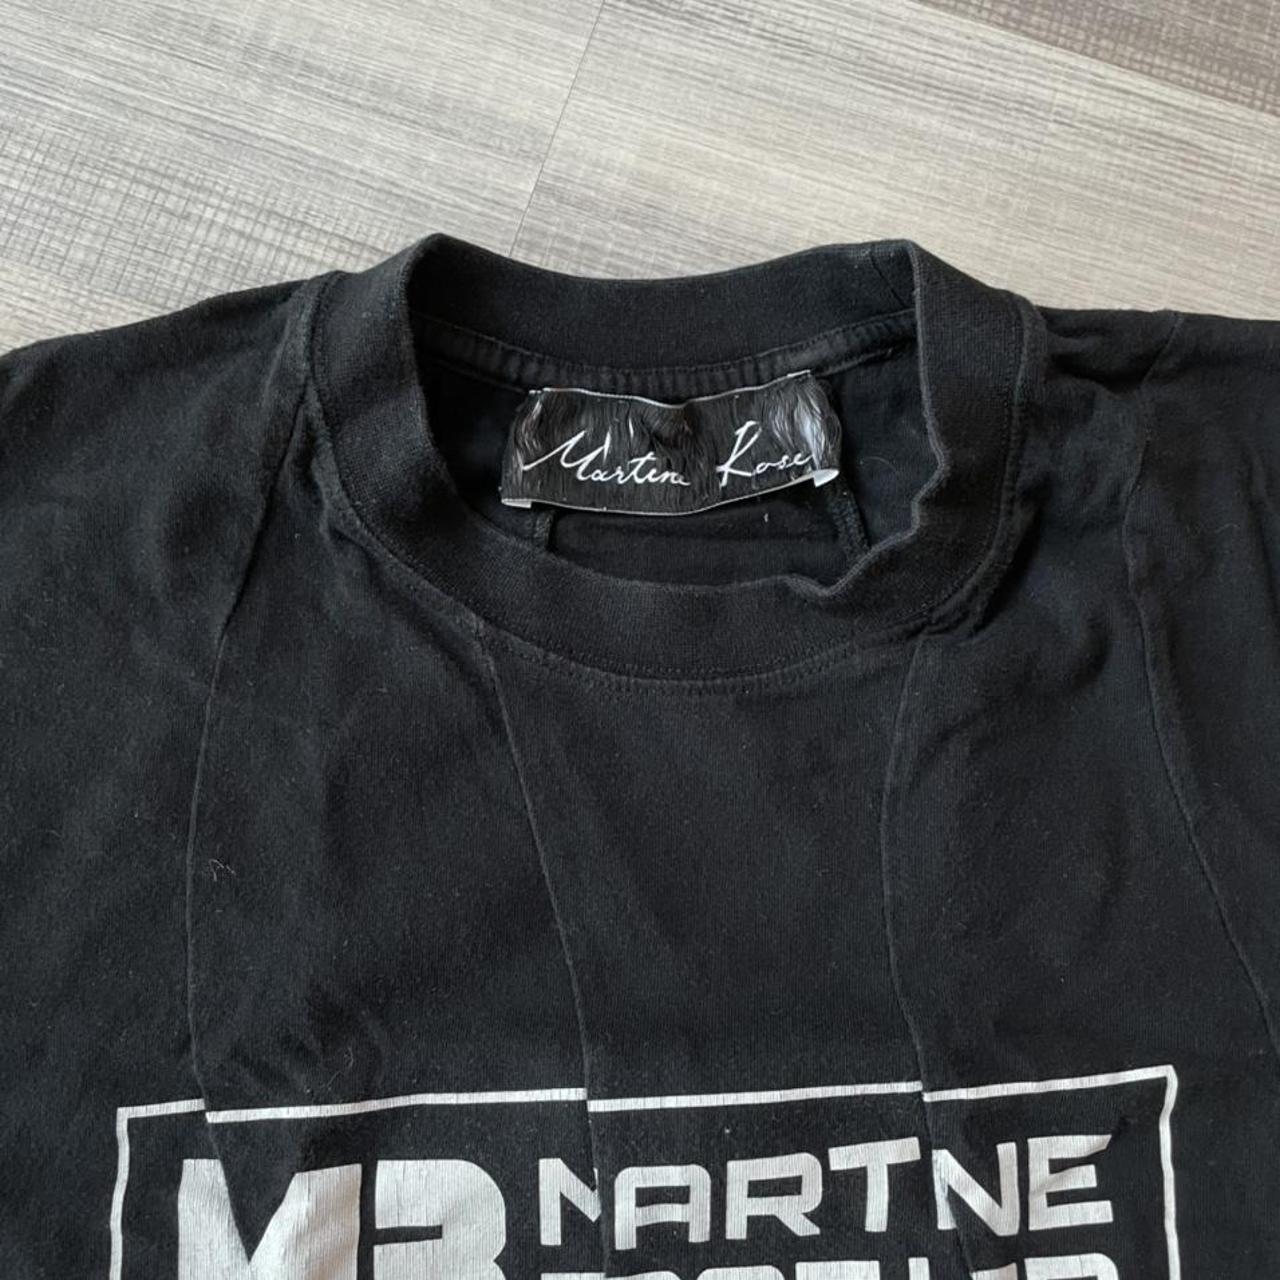 Product Image 3 - Martine rose tshirt. Originally bought